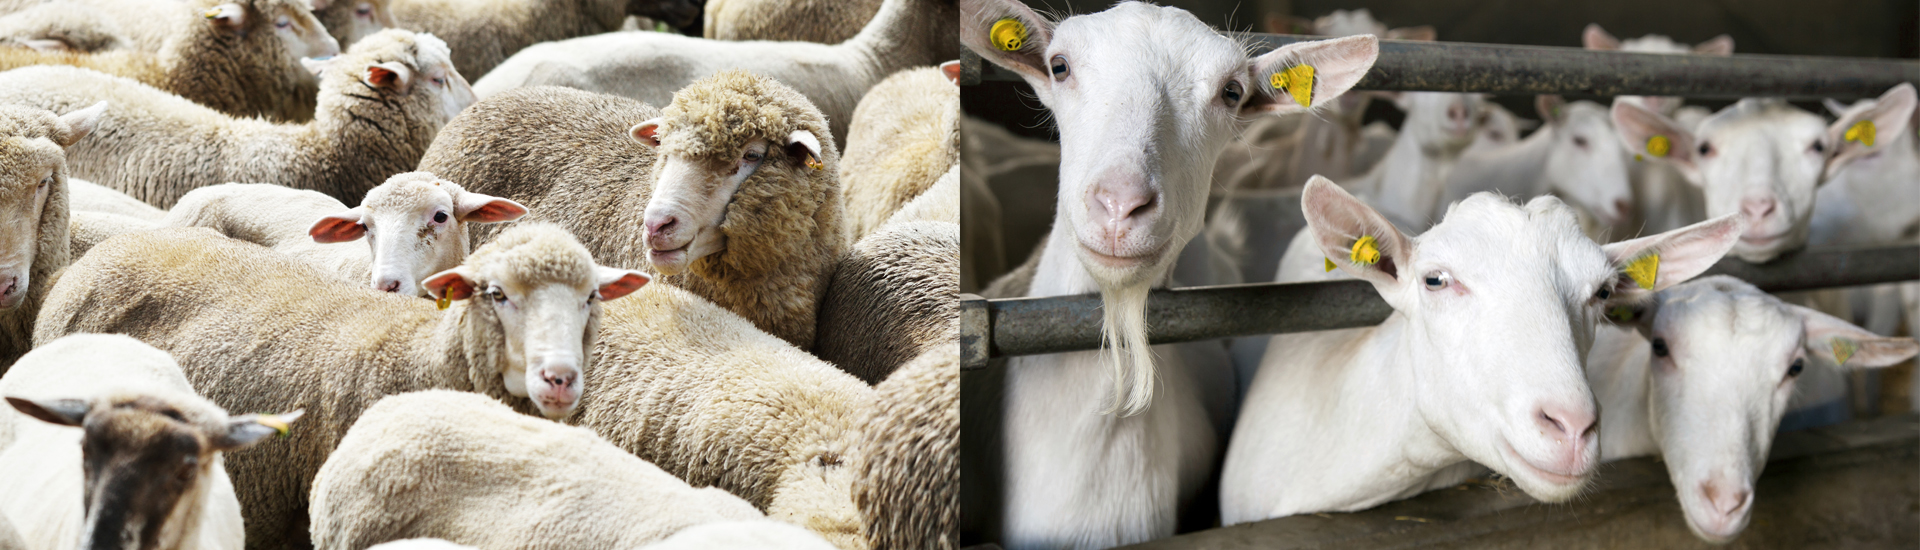 Sheep & Goats